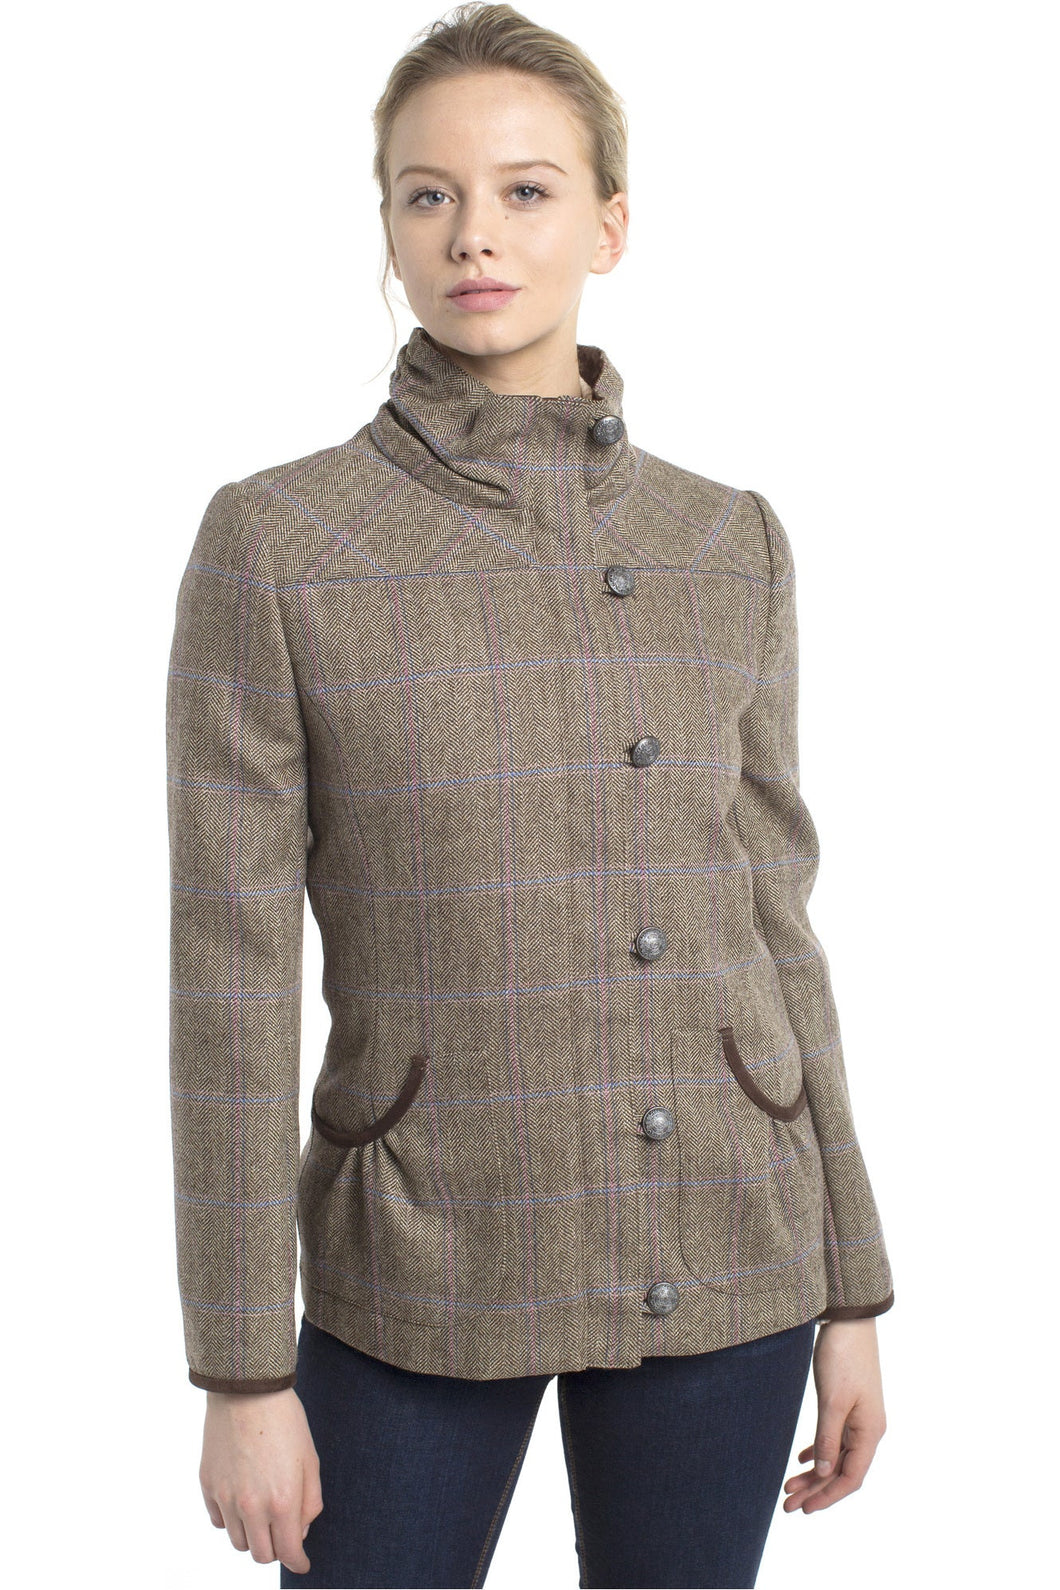 40% OFF DUBARRY Bracken Ladies Tweed Jacket - Woodrose - Size: UK 8